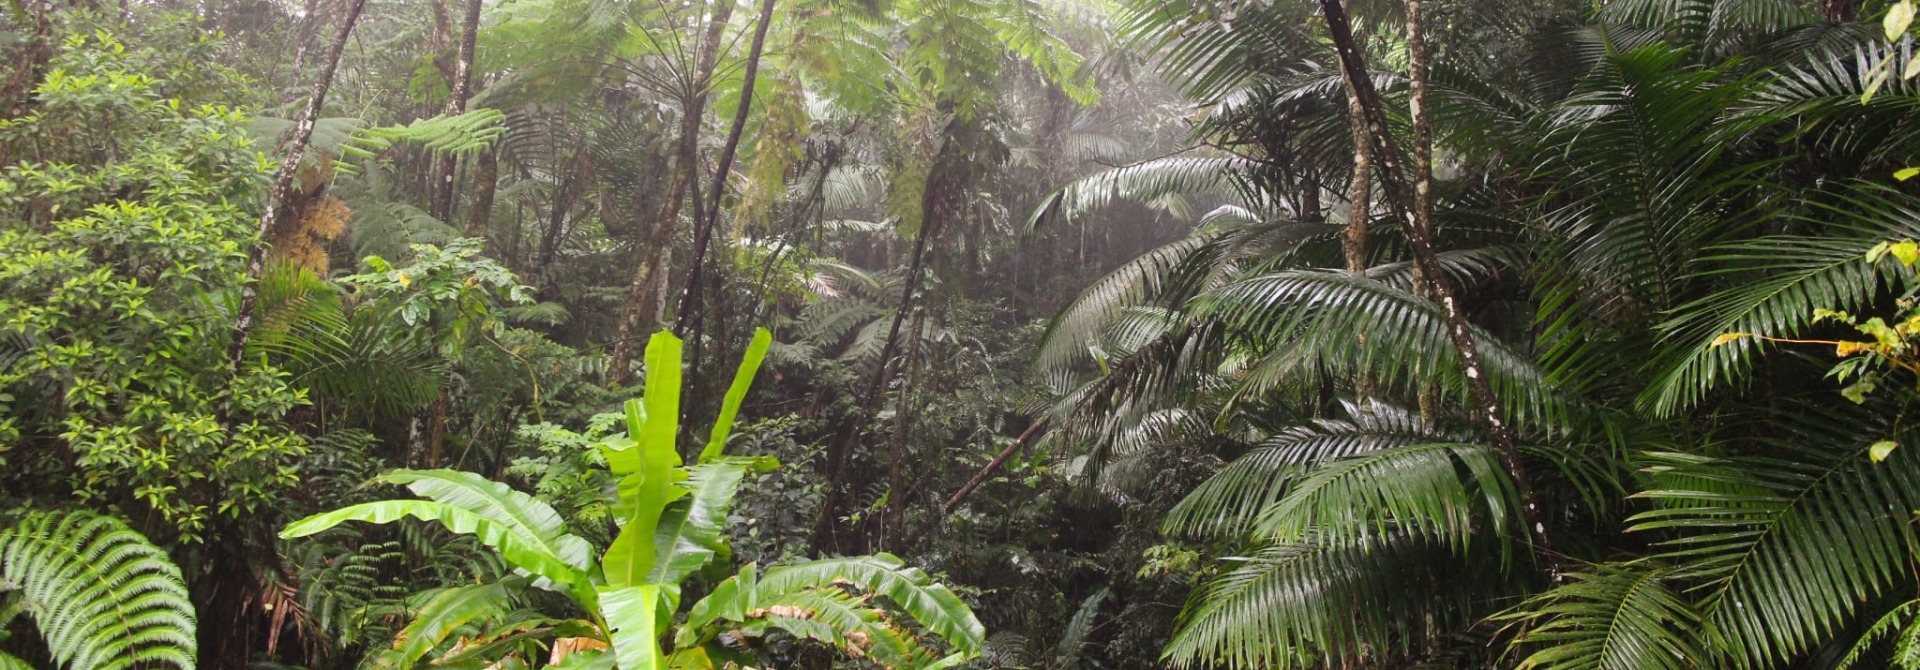 Sierra Palm Forest in Puerto Rico